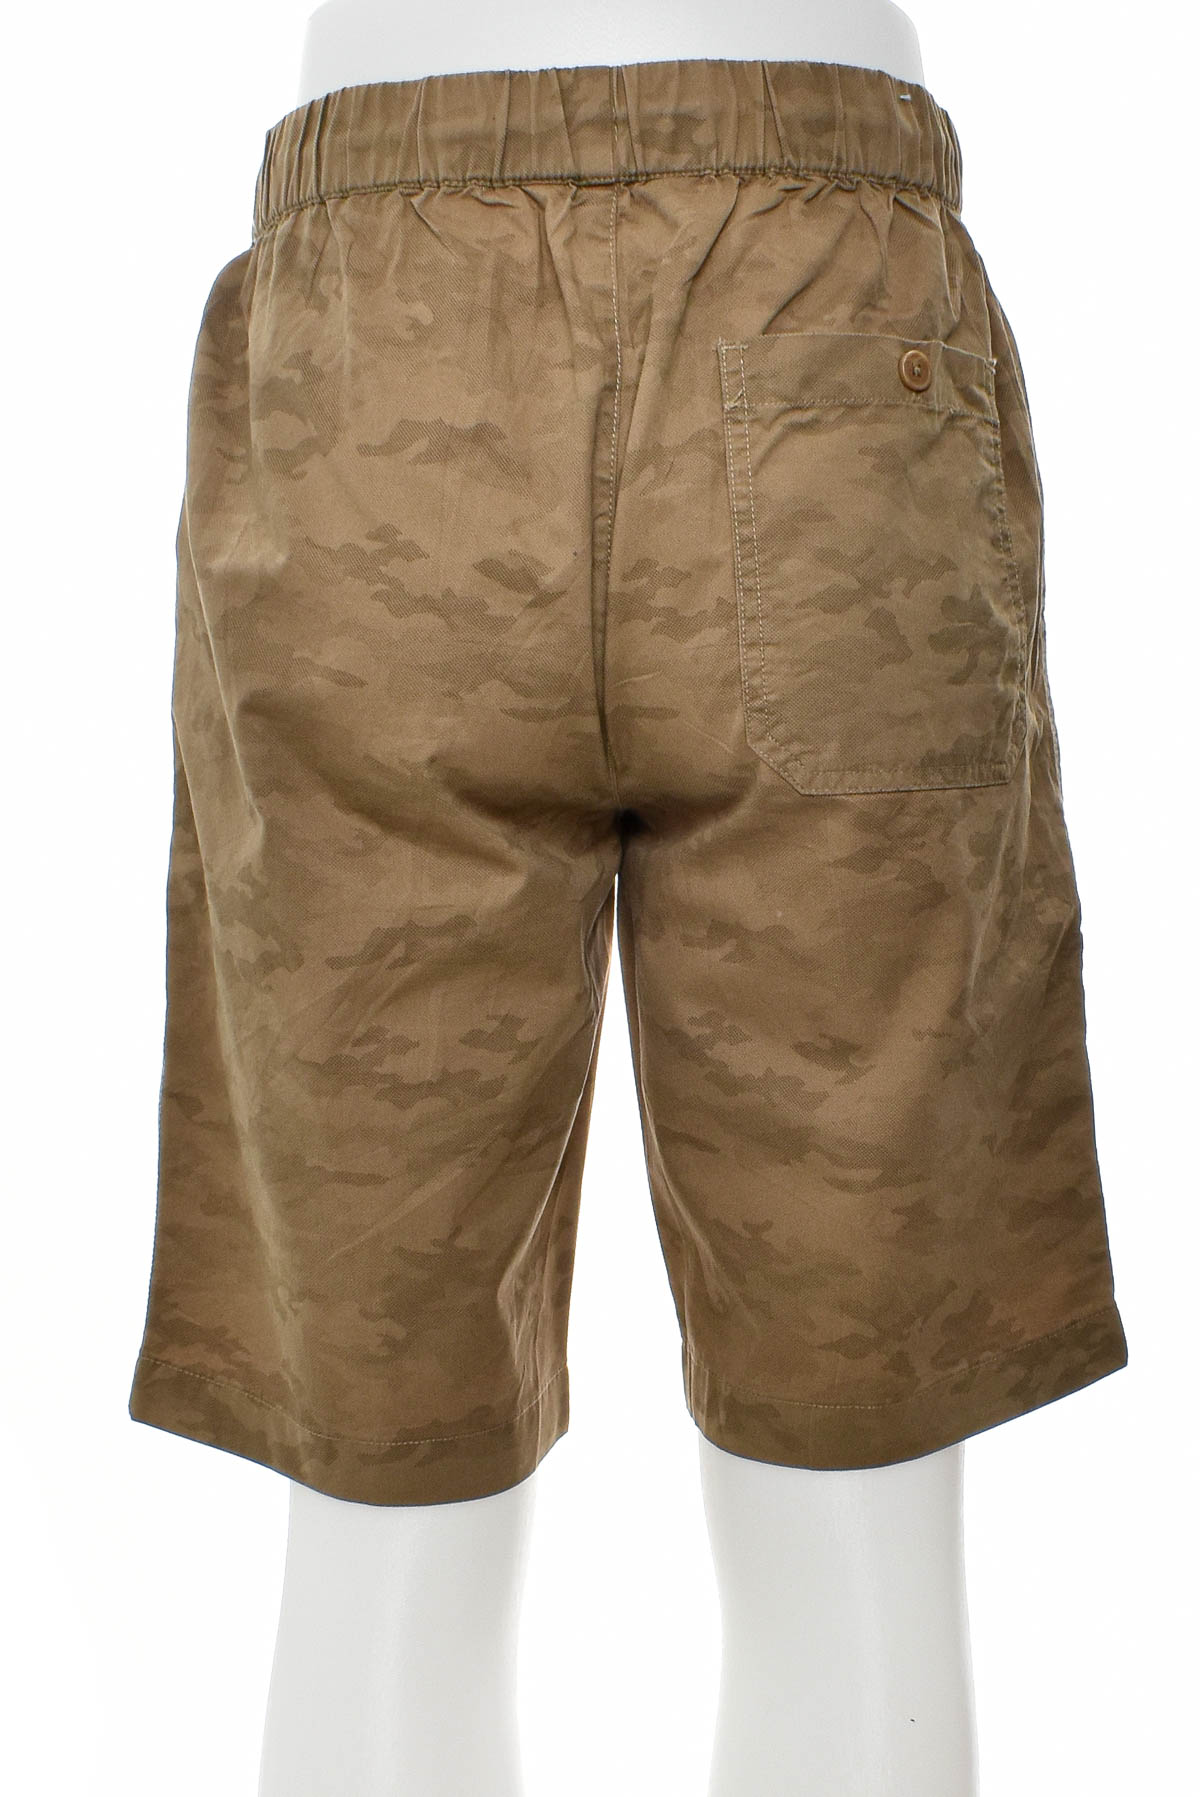 Pantaloni scurți bărbați - Giordano - 1